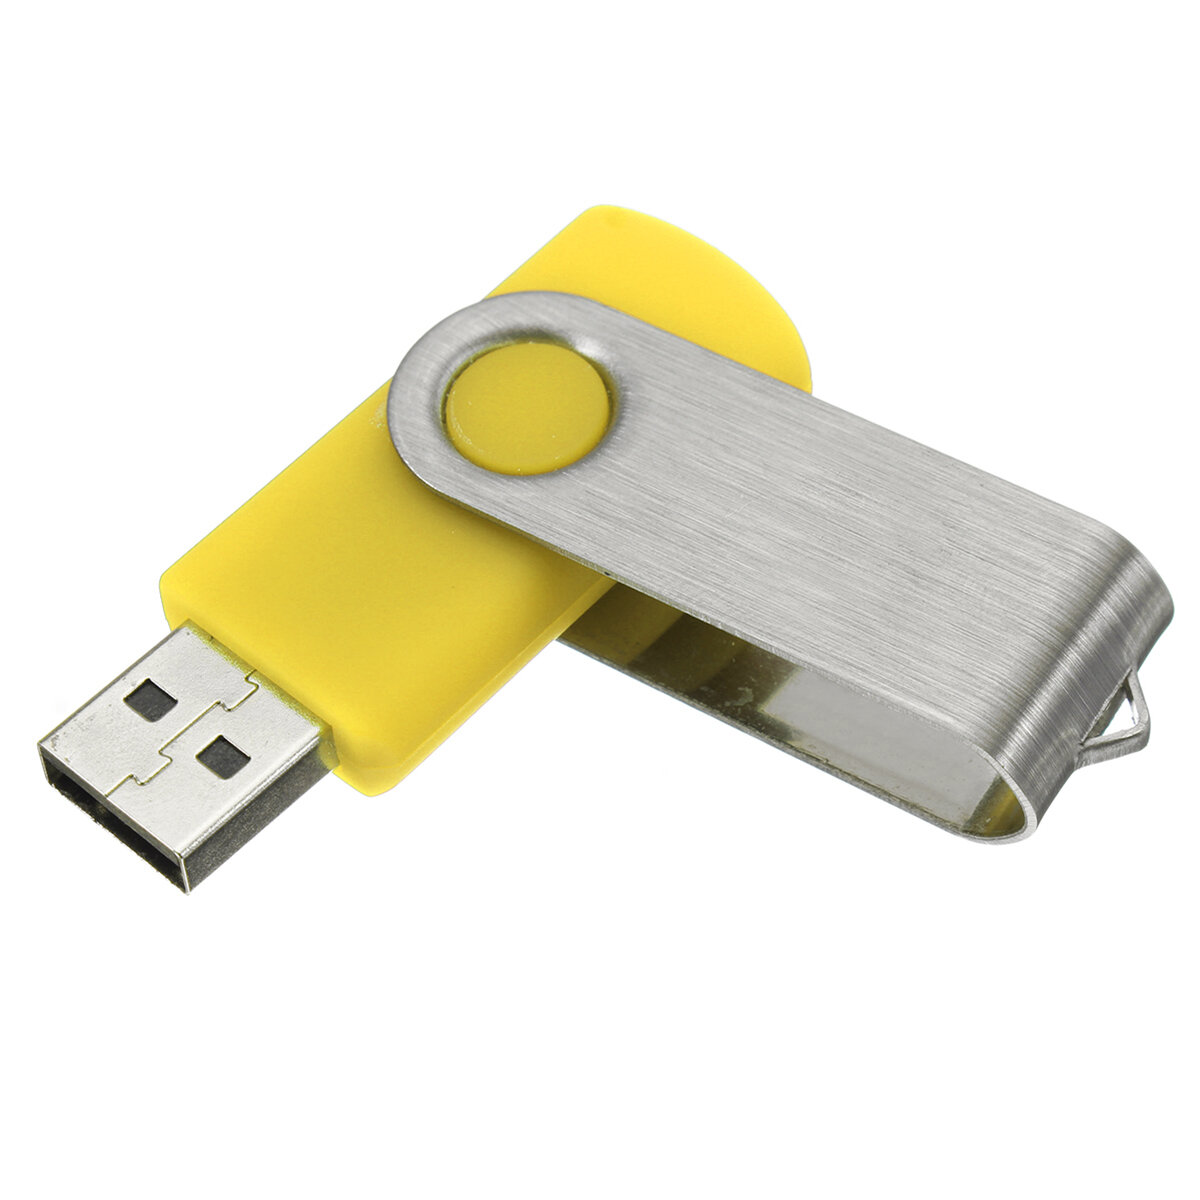 USB 2.0 64 MB USB 2.0 Flash Drive Colorful Pendrive 360? Rotatie Thumb Drive